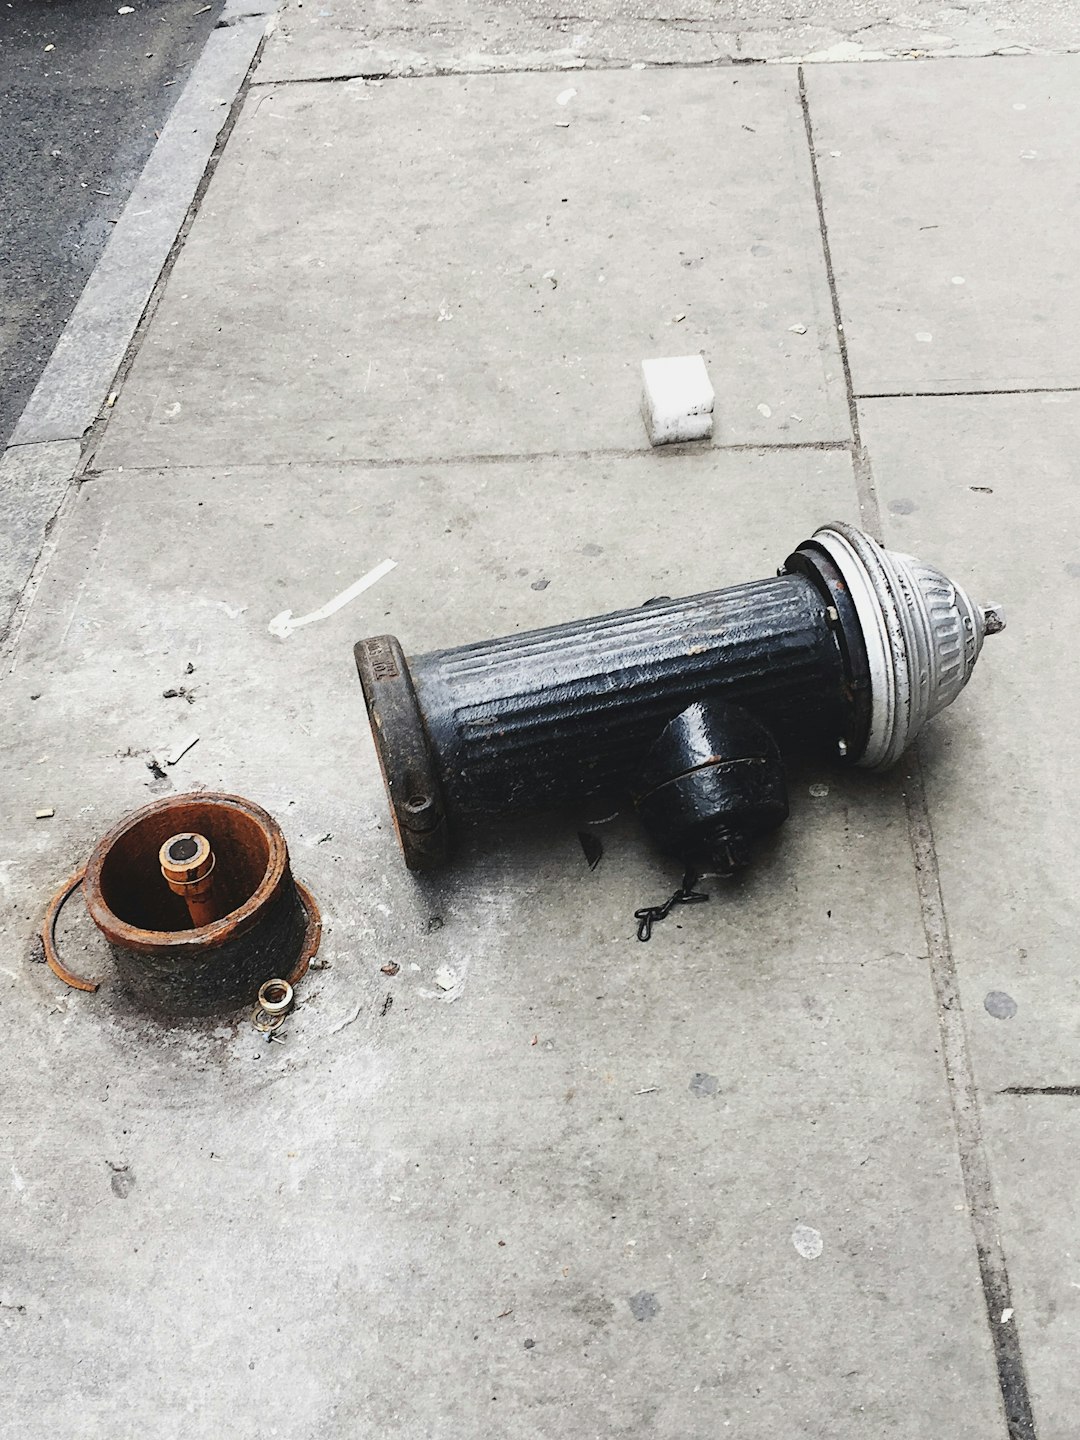 fire hydrant lying on it's side on concrete floor